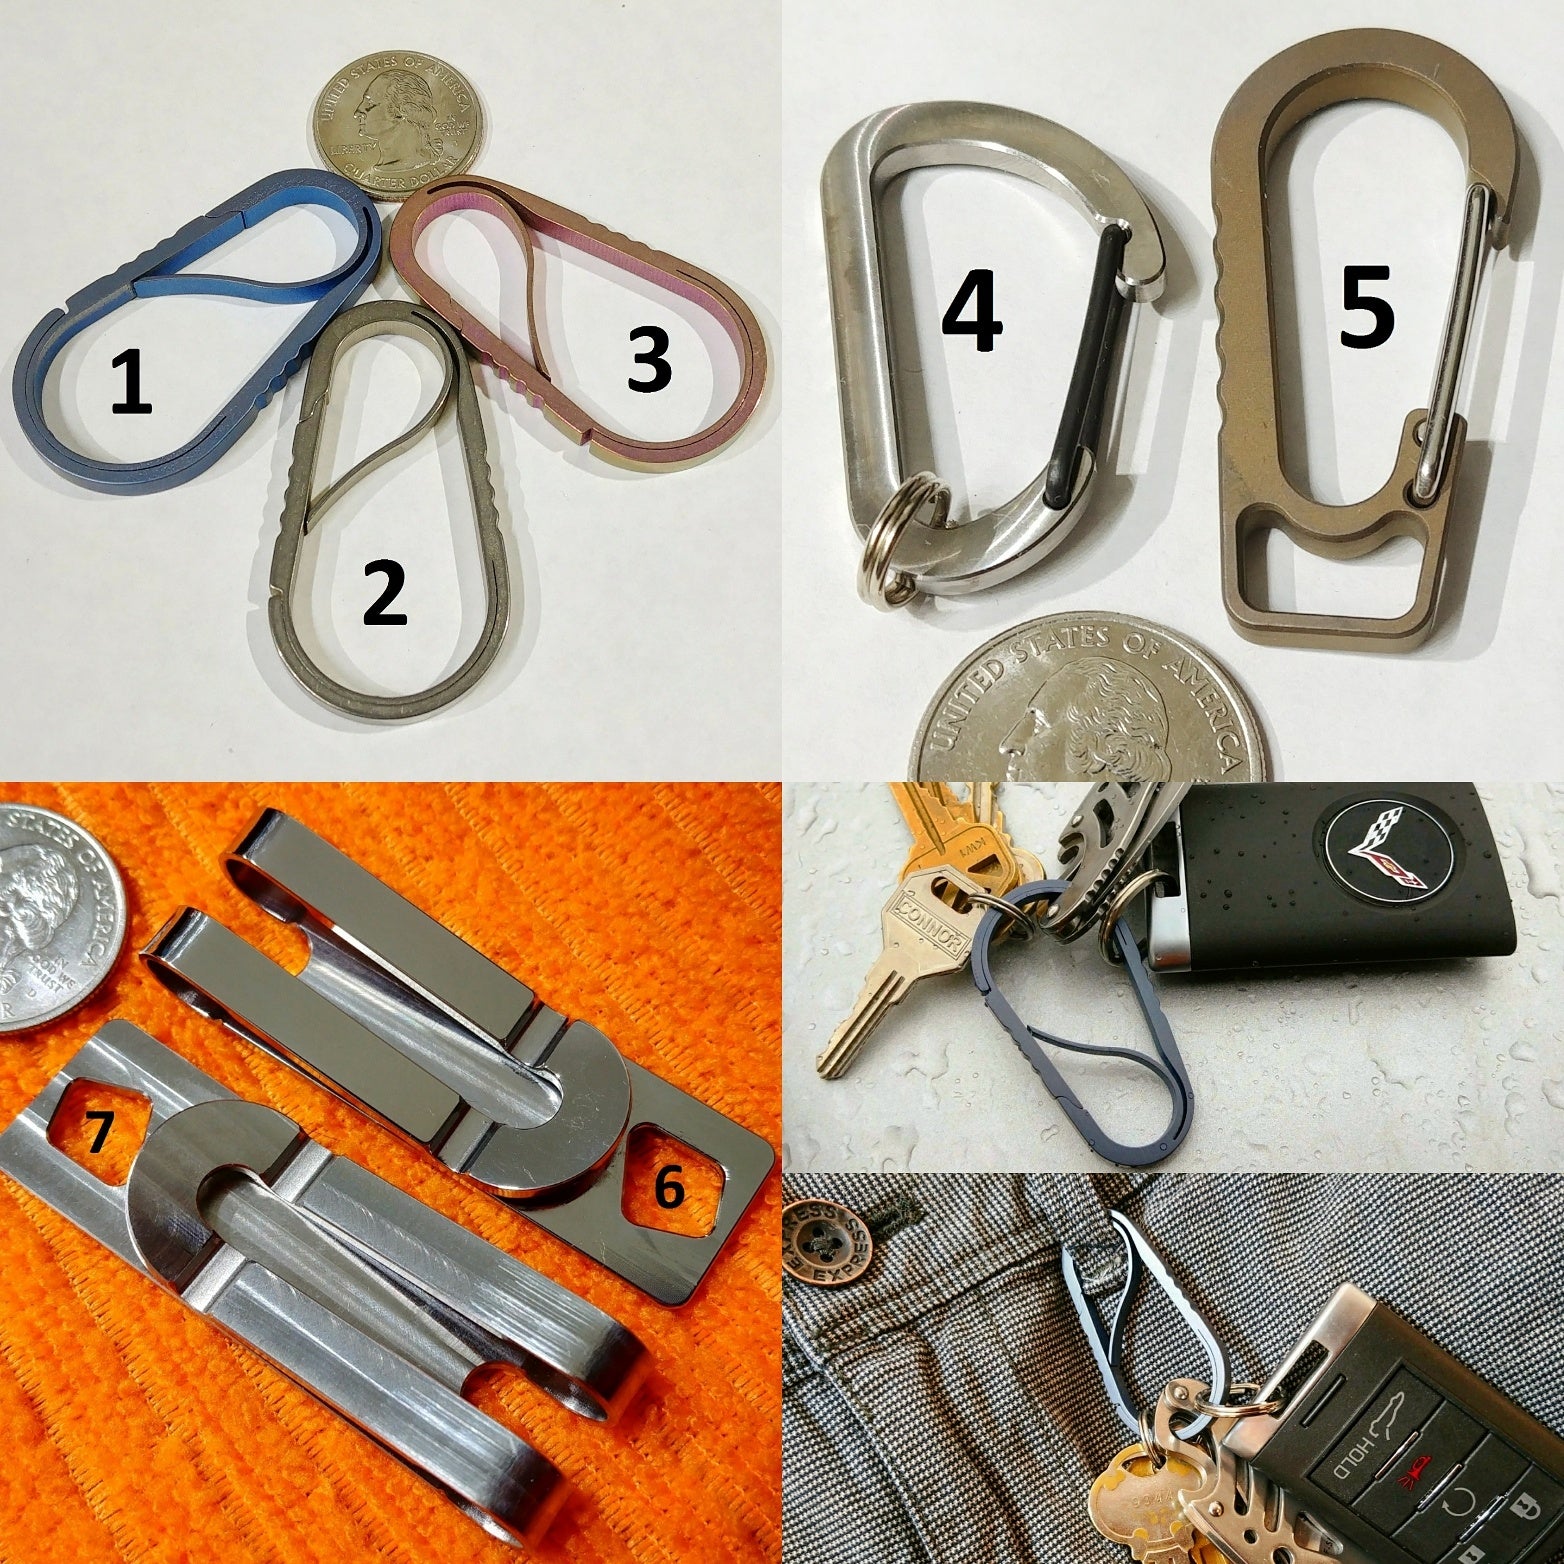 Carabiner Clip Clips For Keys Bunny Key Pendant Couple Models